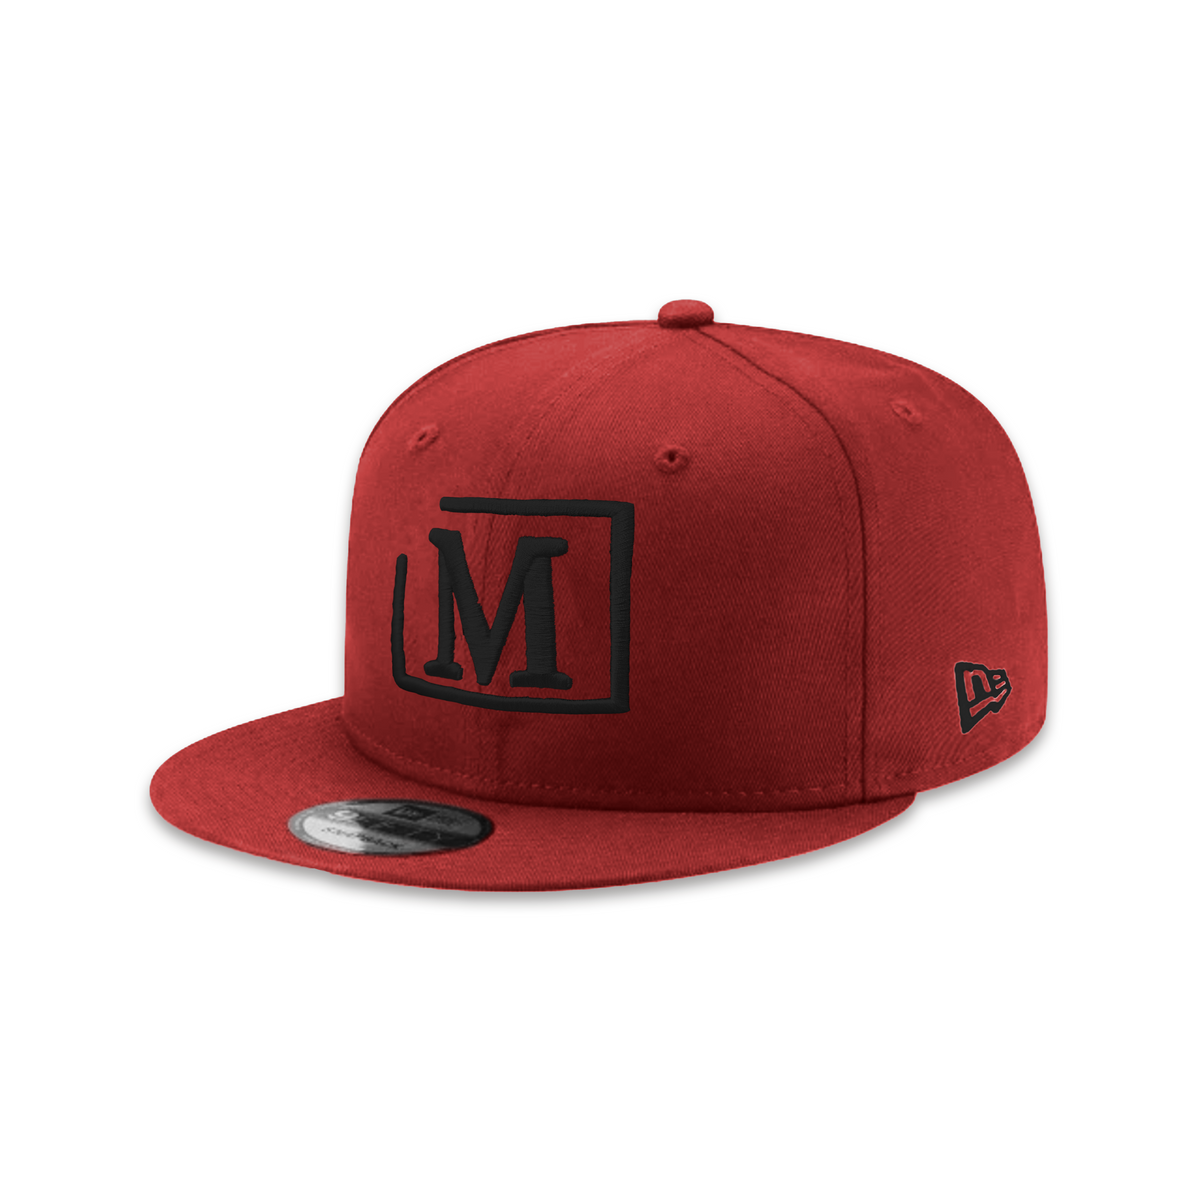 MDB Brand x New Era 9Fifty Snapback Embroidered Baseball Cap - Red